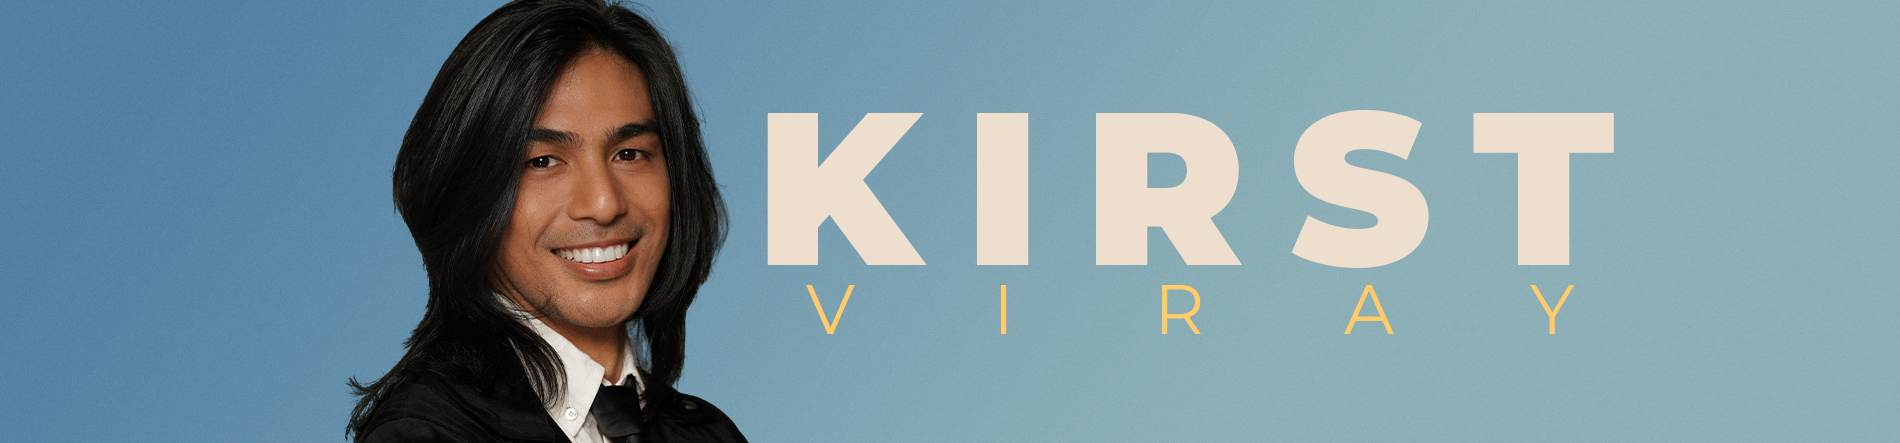 Kirst Viray Desktop Banner